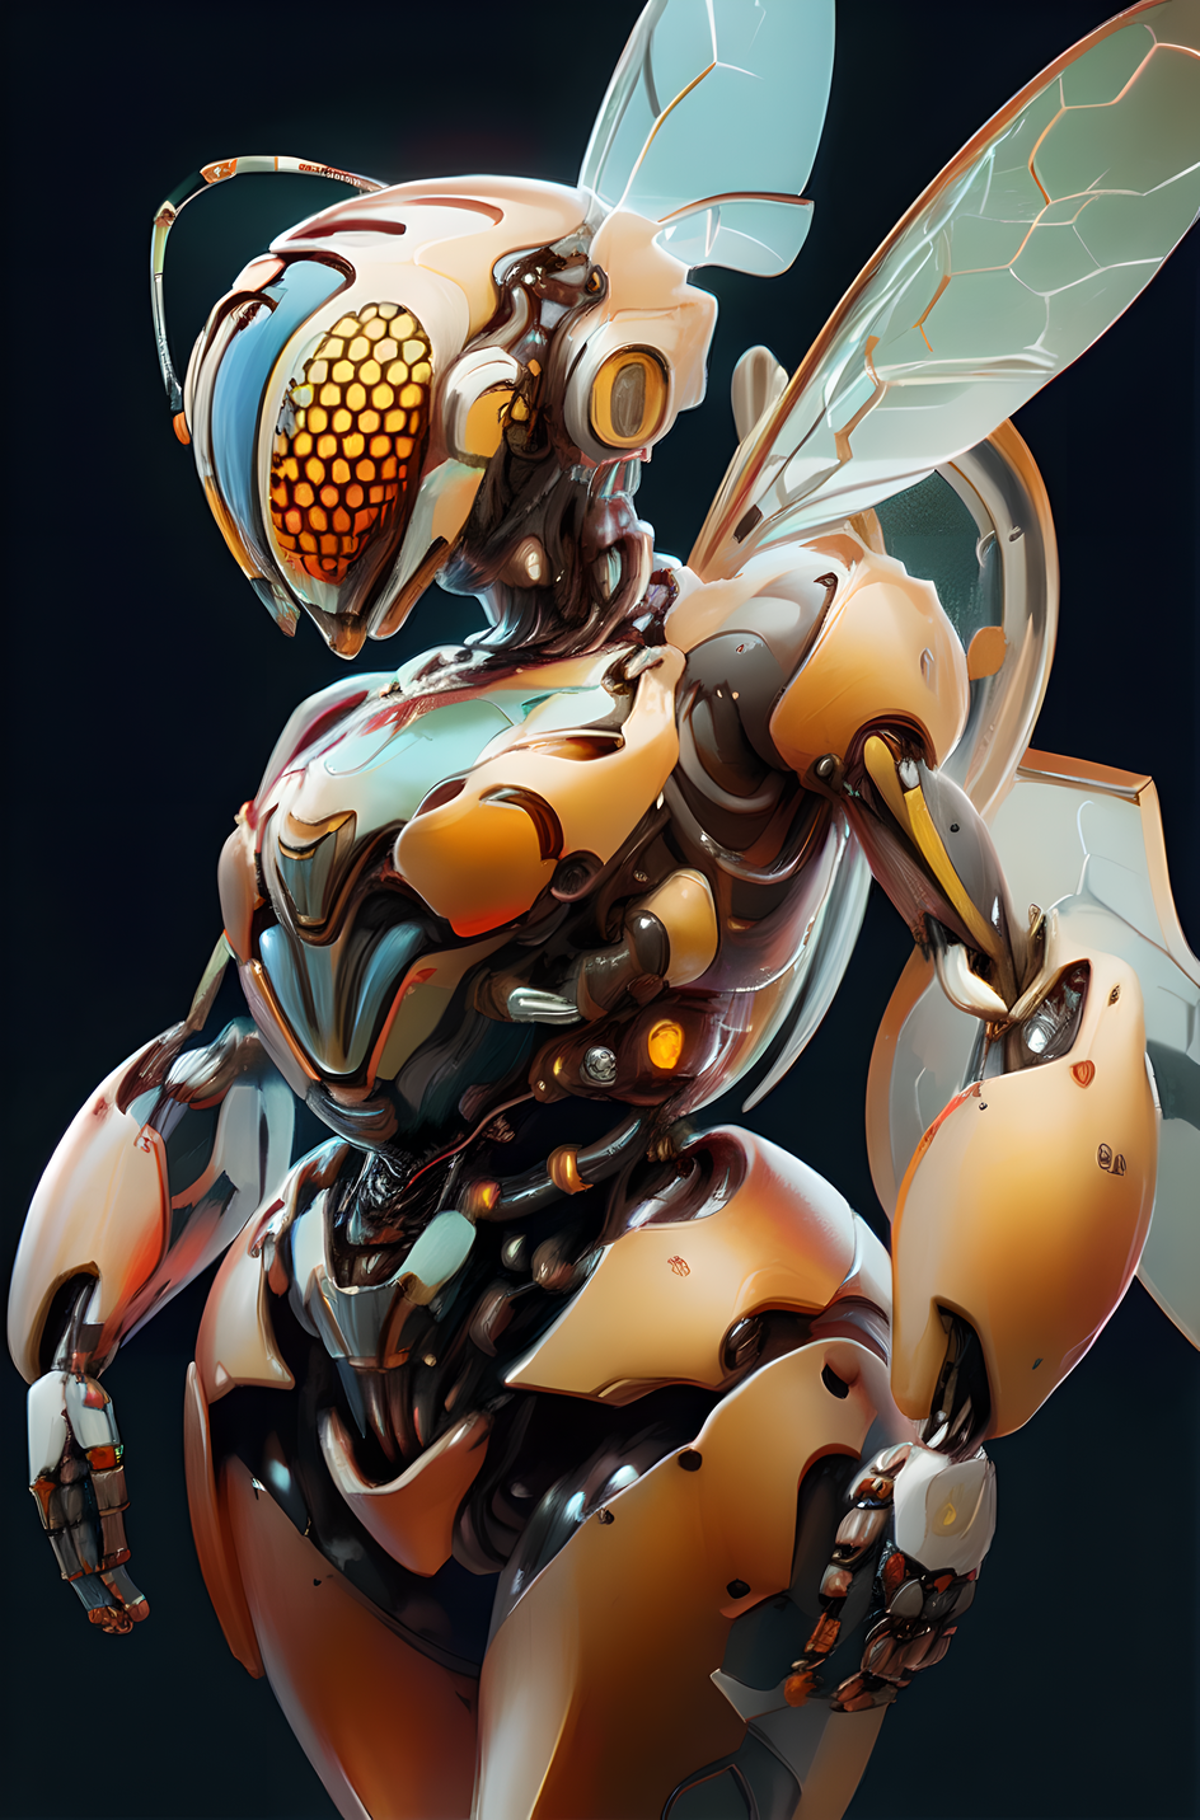 AI model image by SilverSoul